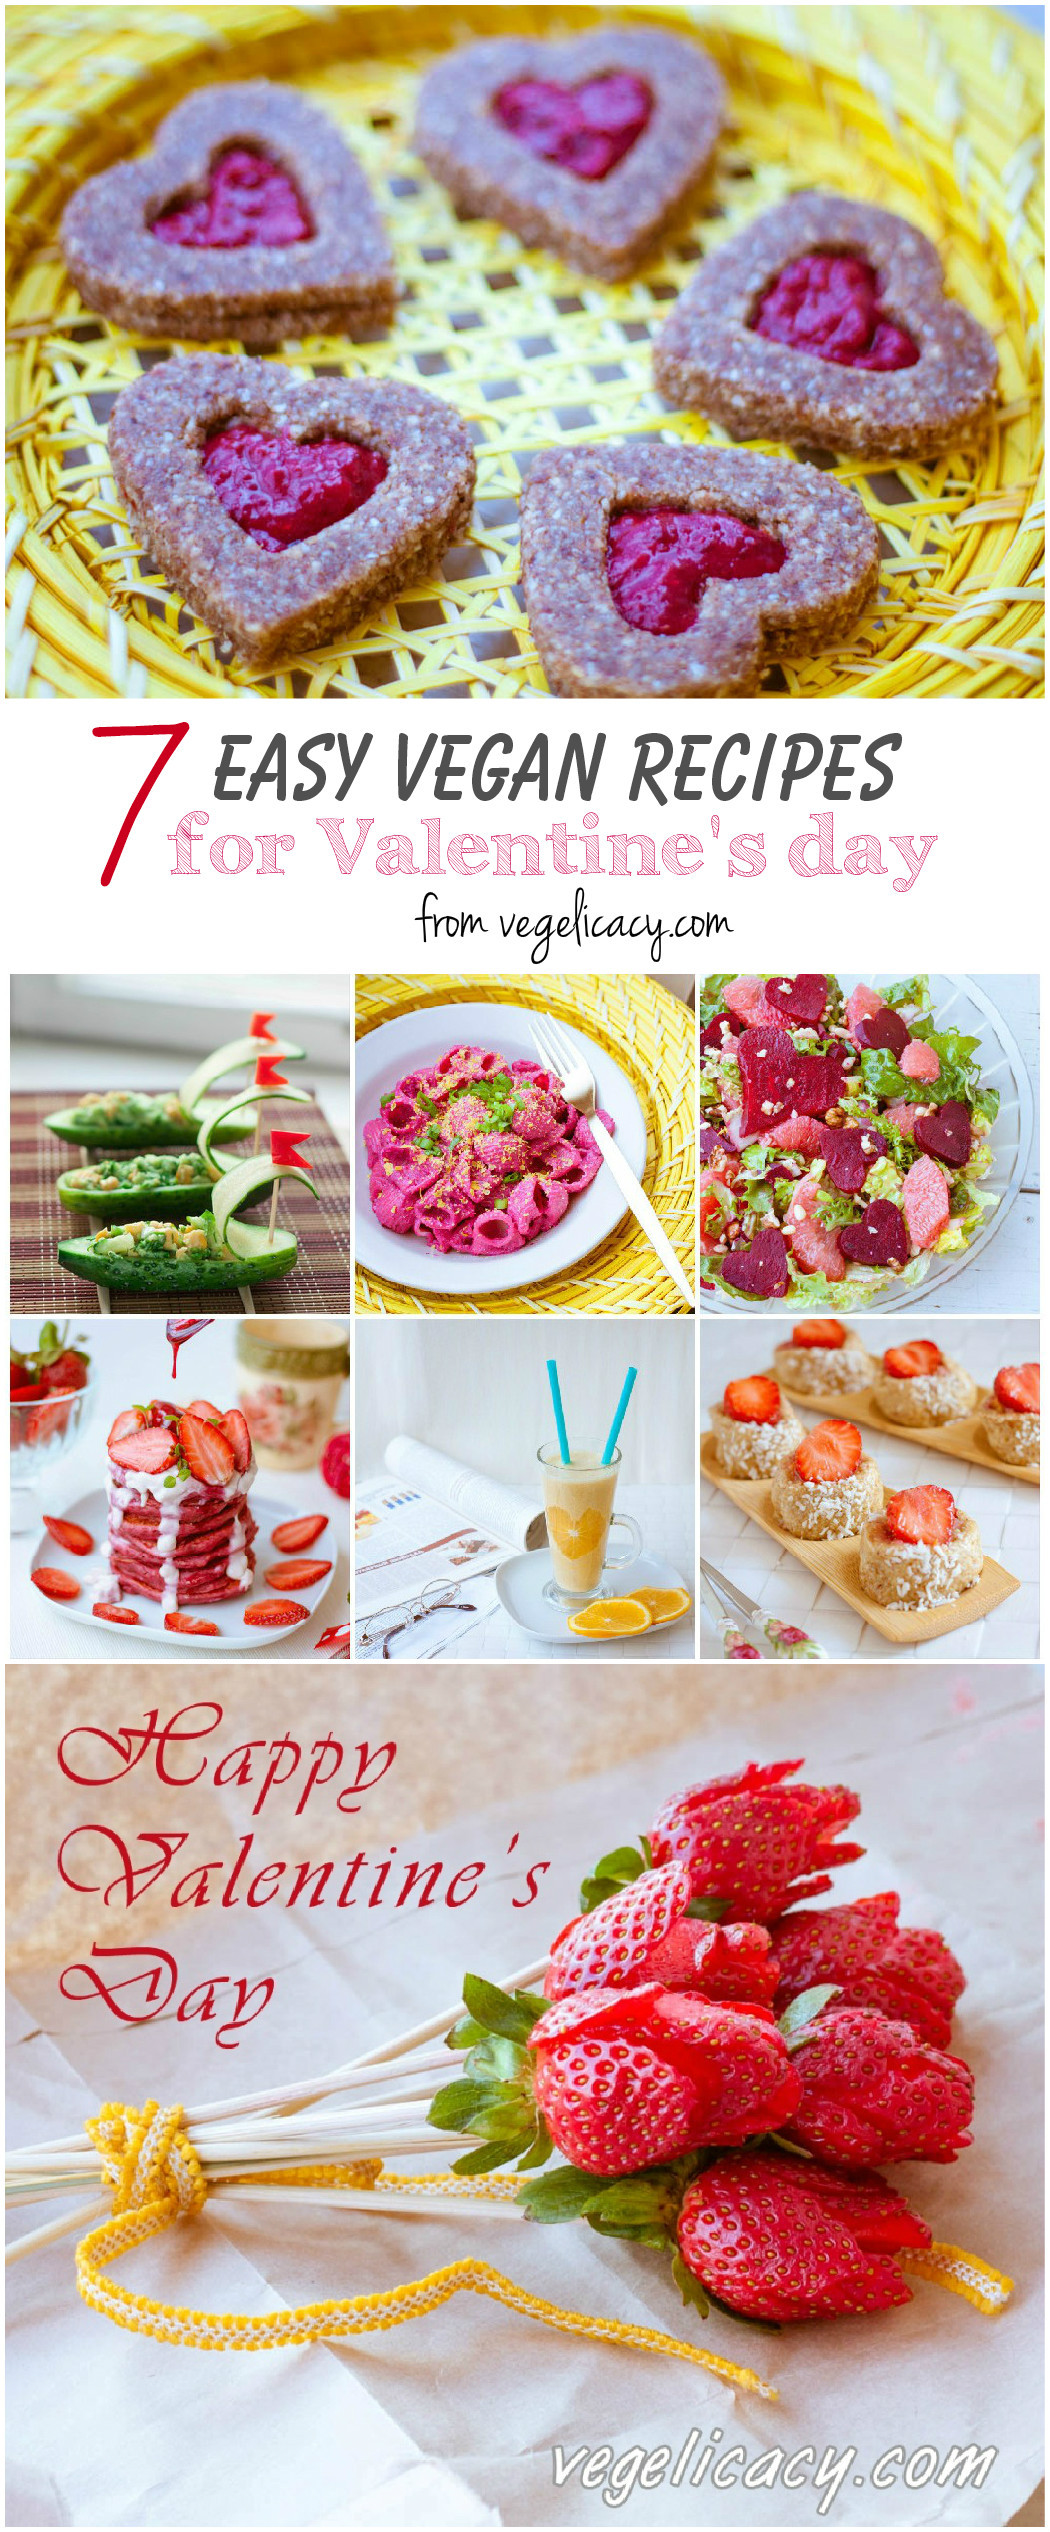 Vegetarian Valentine Day Recipes
 Top 7 easy vegan recipes for Valentine s day